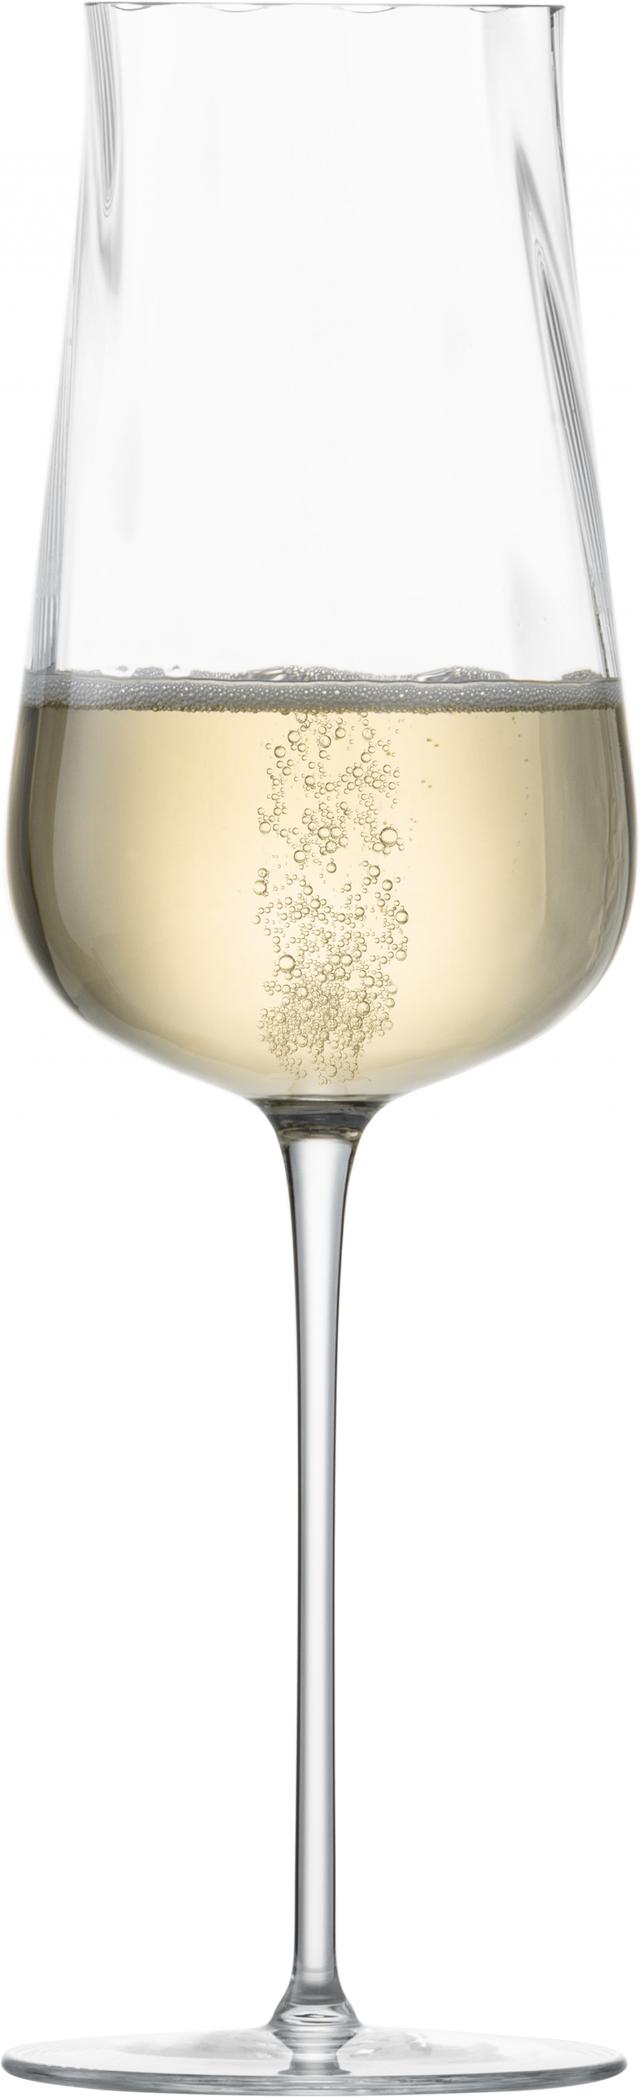 zwiesel glas marlène champagneflûte met mp 77 - 0.365ltr - geschenkverpakking 2 glazen